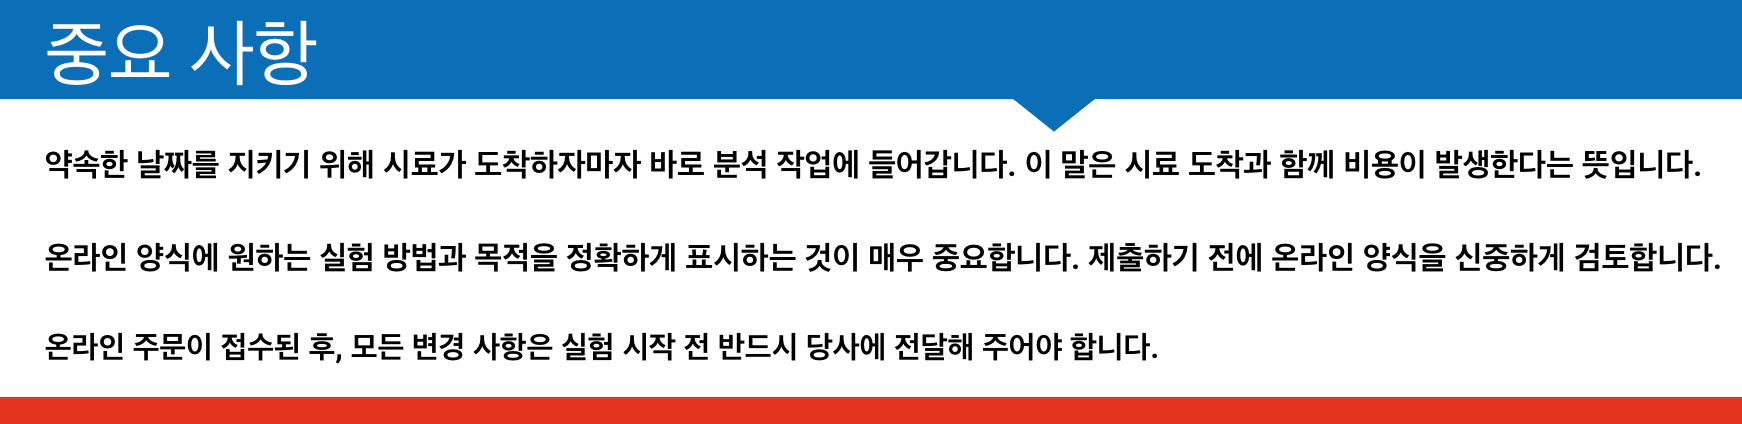 Beta Analytic Important Reminders in Korean